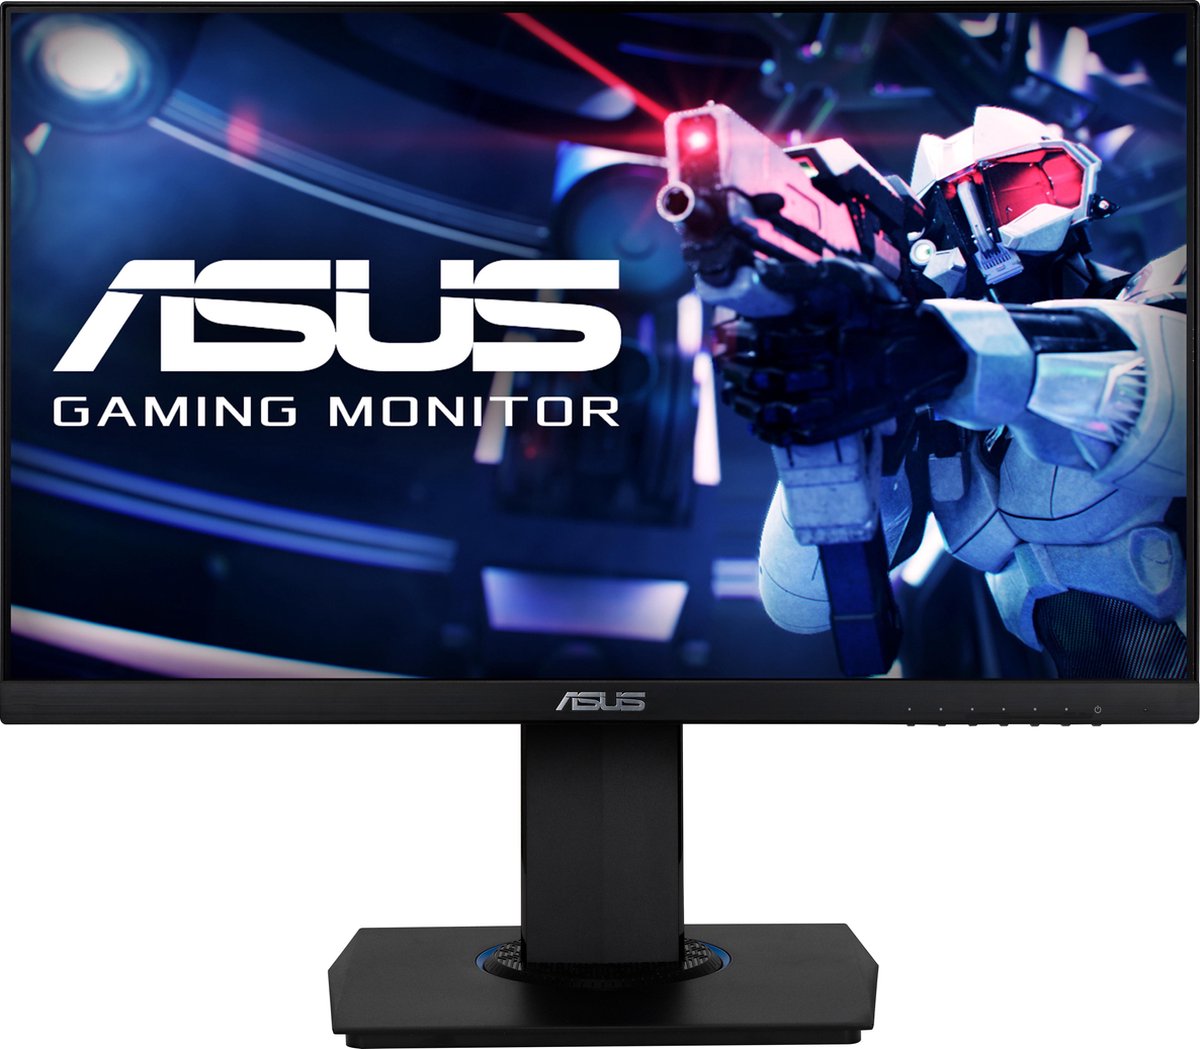 ASUS VG246H - Full HD IPS Gaming Monitor - 24 inch